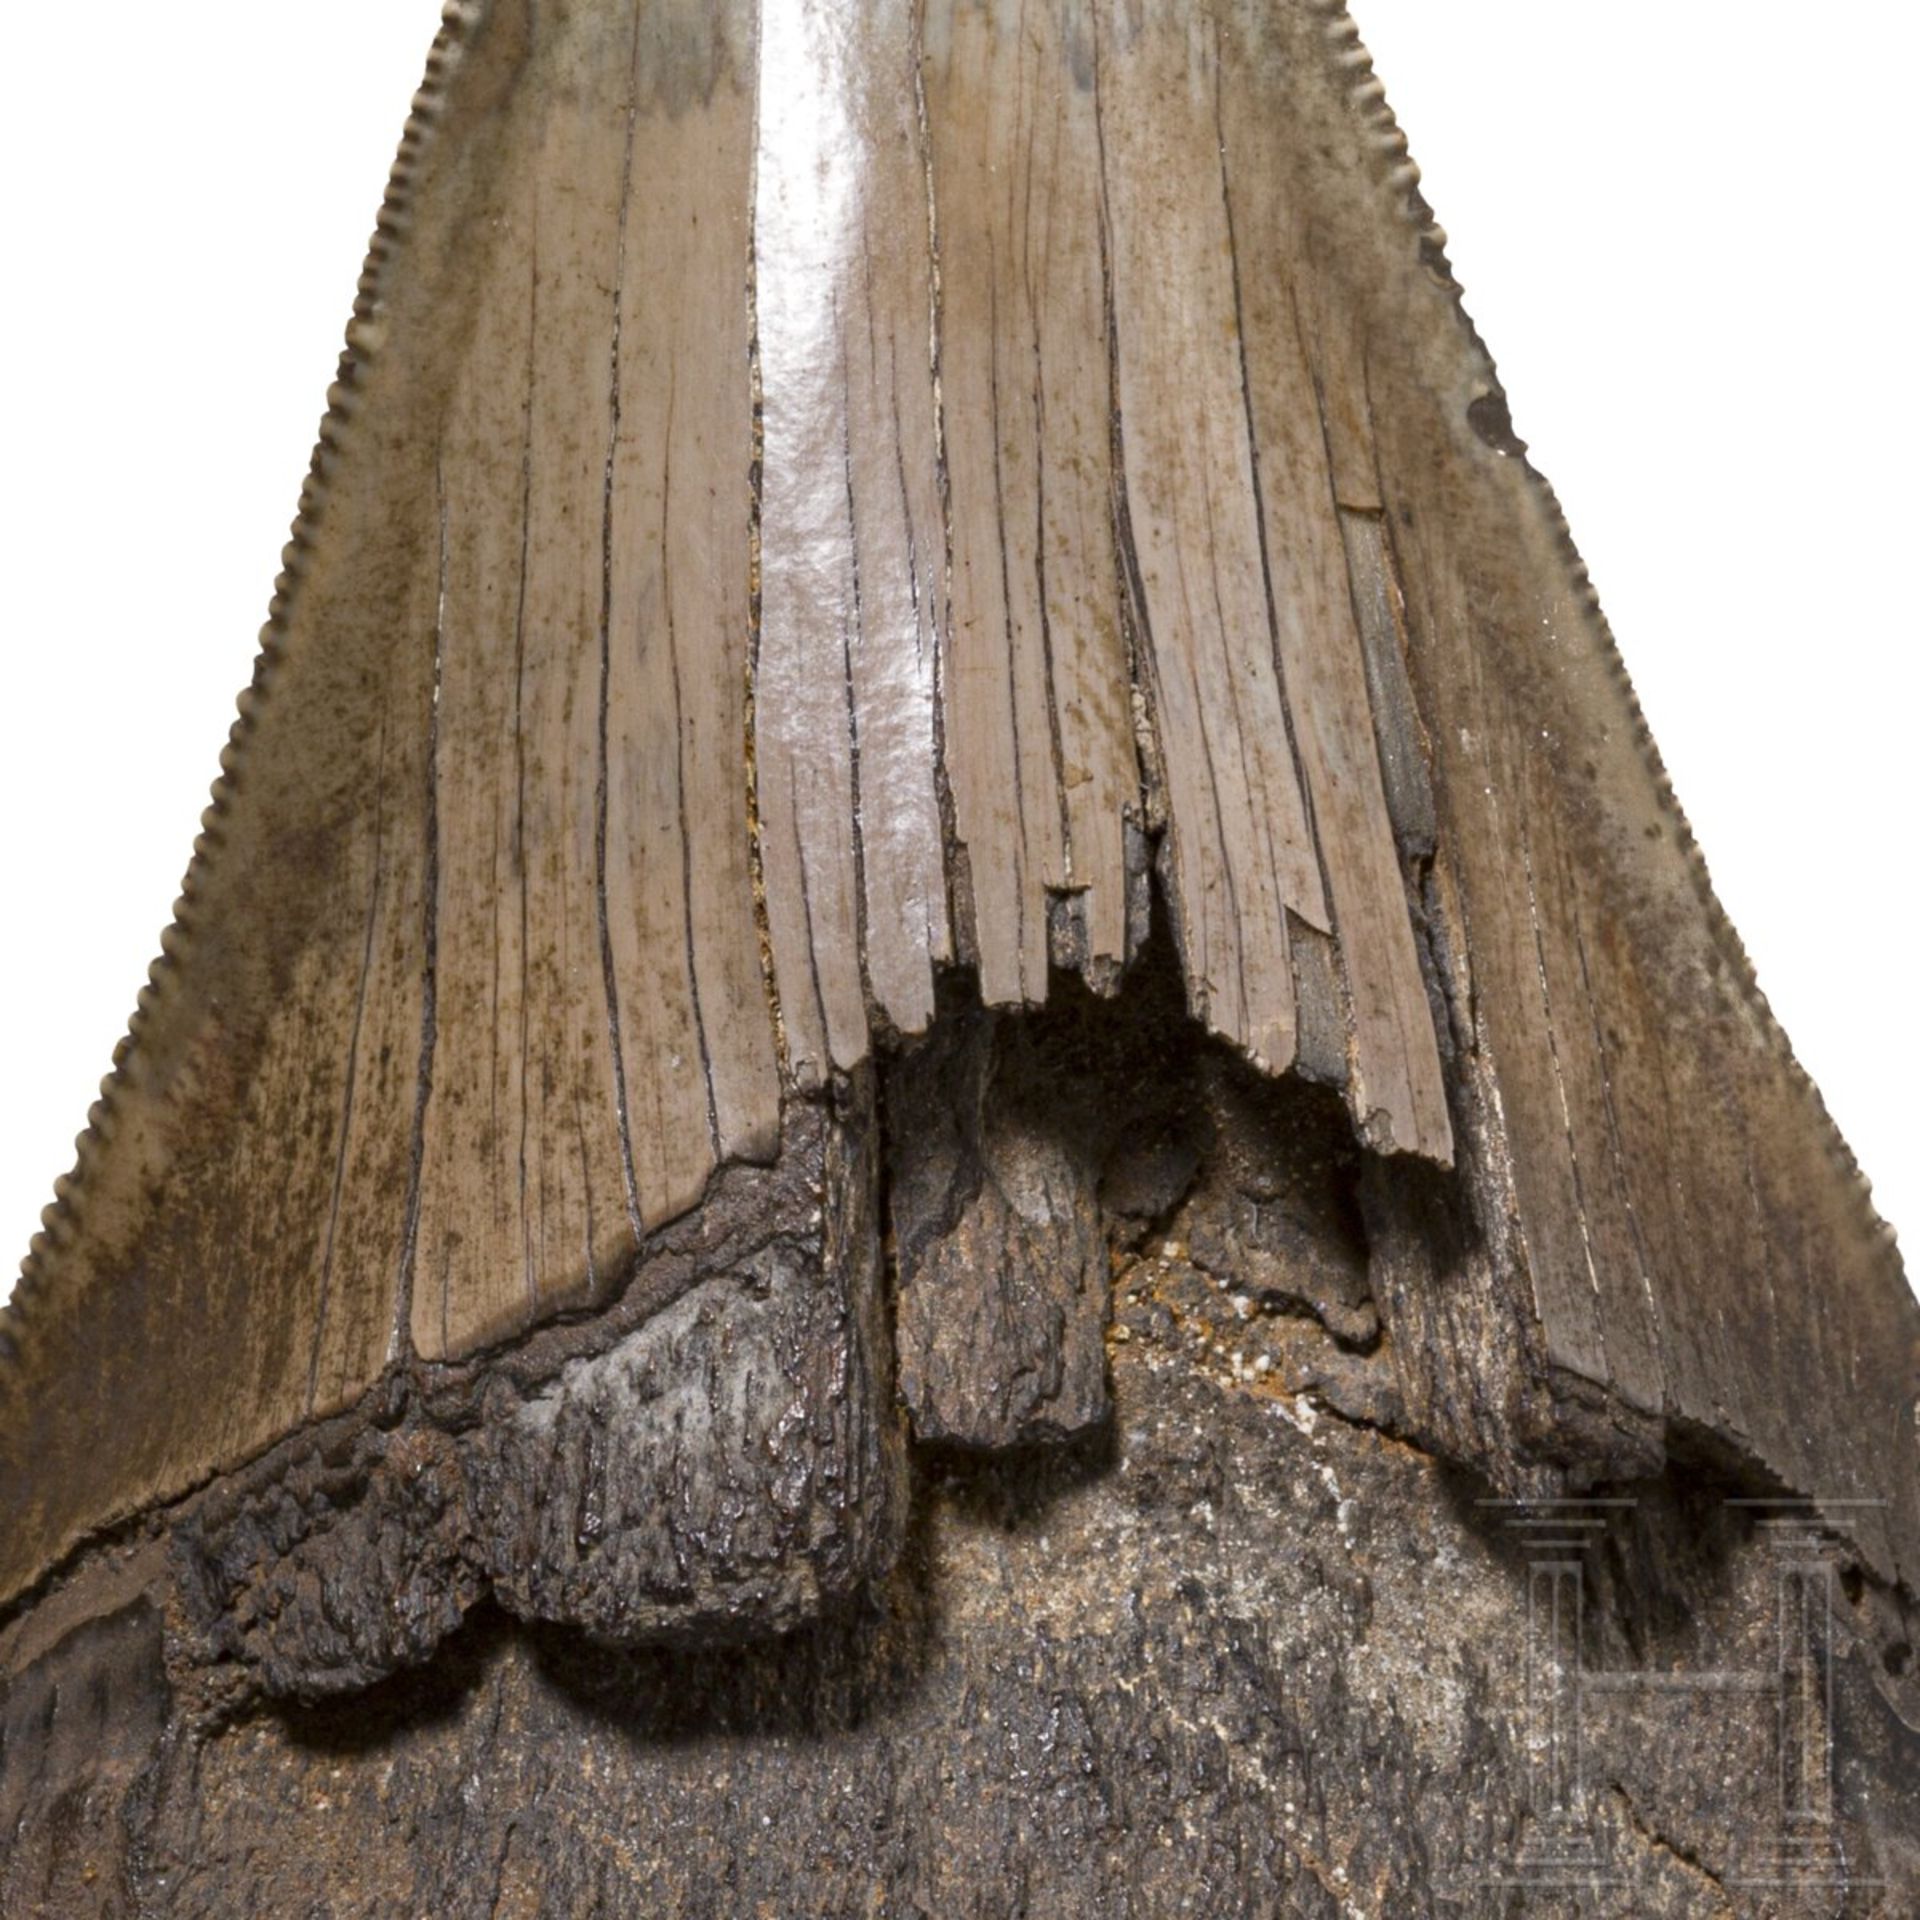 Fossiler Zahn eines otodus megalodon, frühes Miozän - spätes Pliozän - Bild 3 aus 3